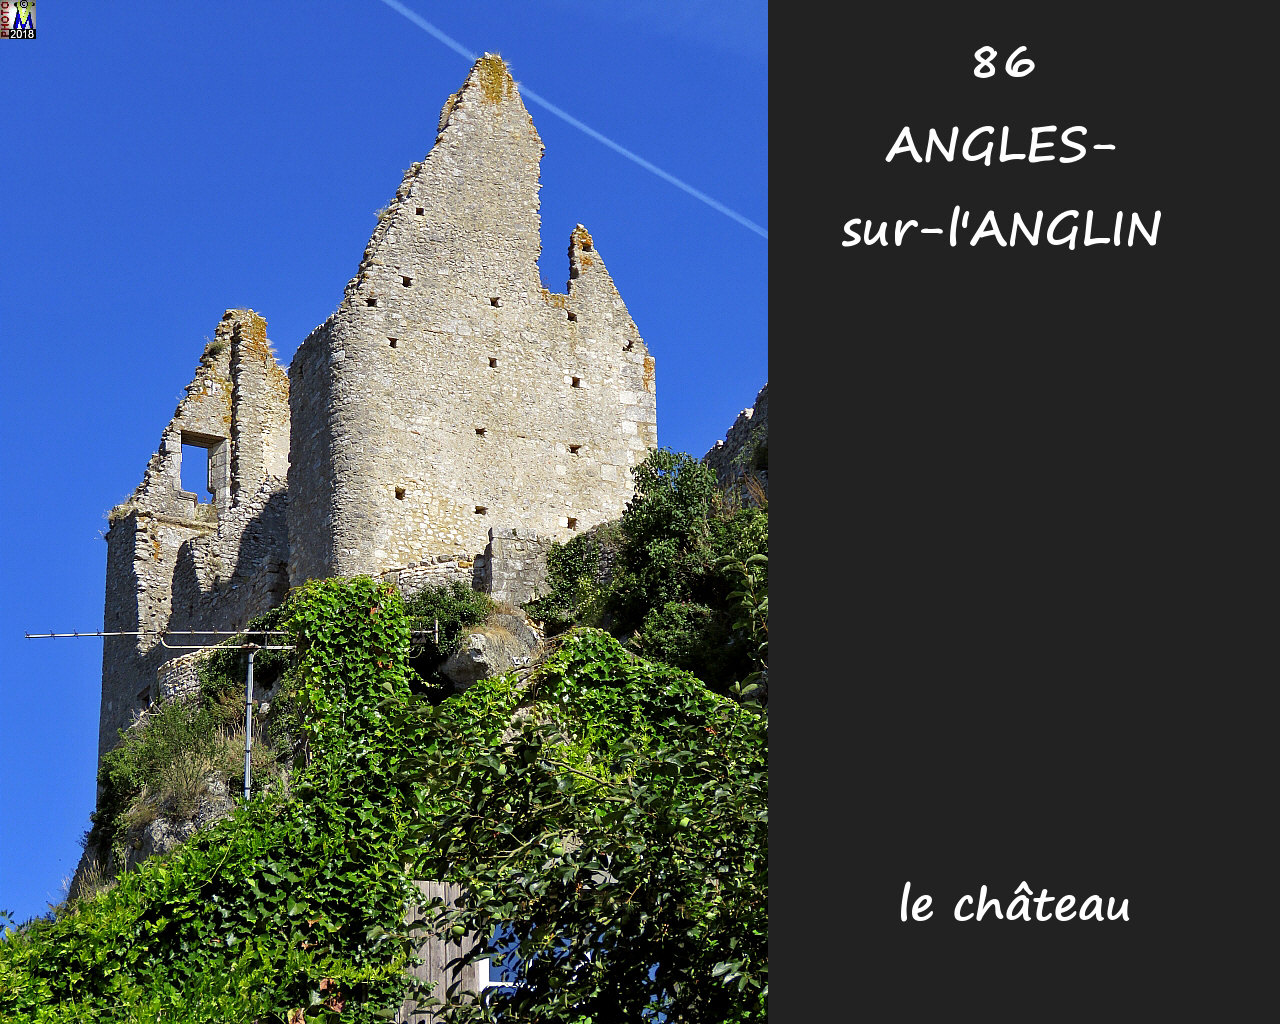 86ANGLES-S-ANGLIN_chateau_1028.jpg